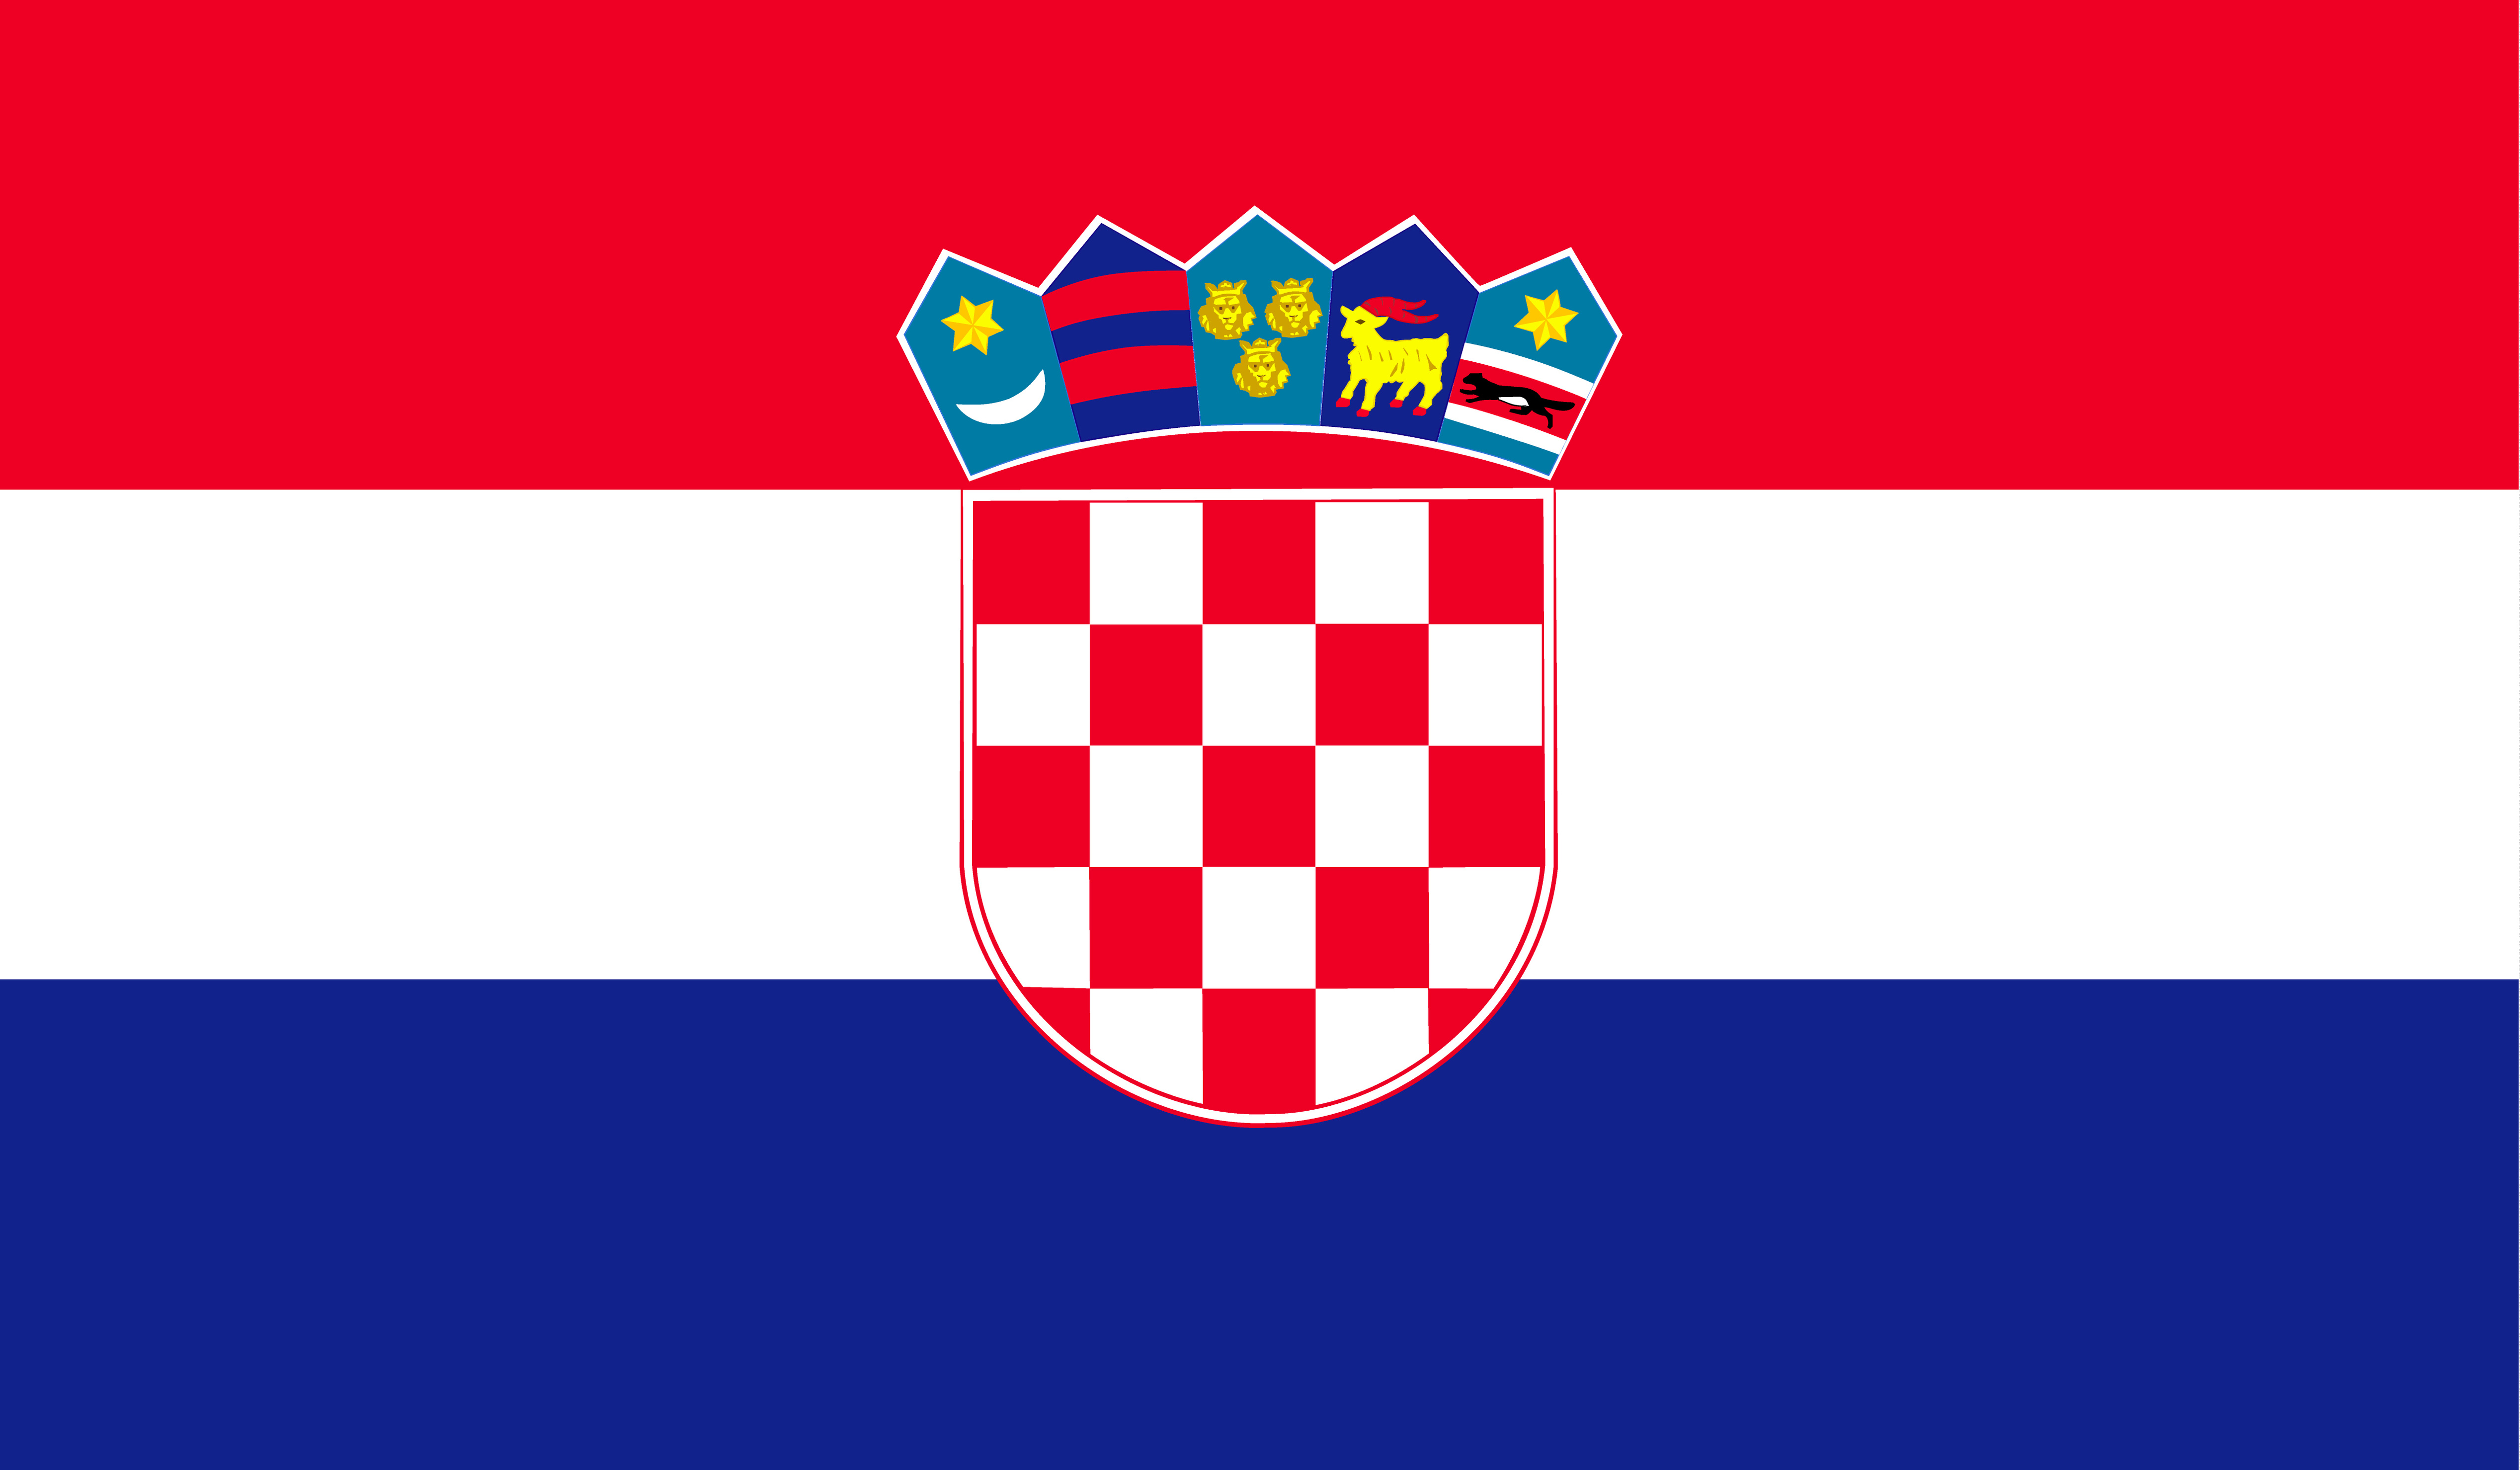 Game On Croatia Team Flag | CatchStat.com Live Scoring